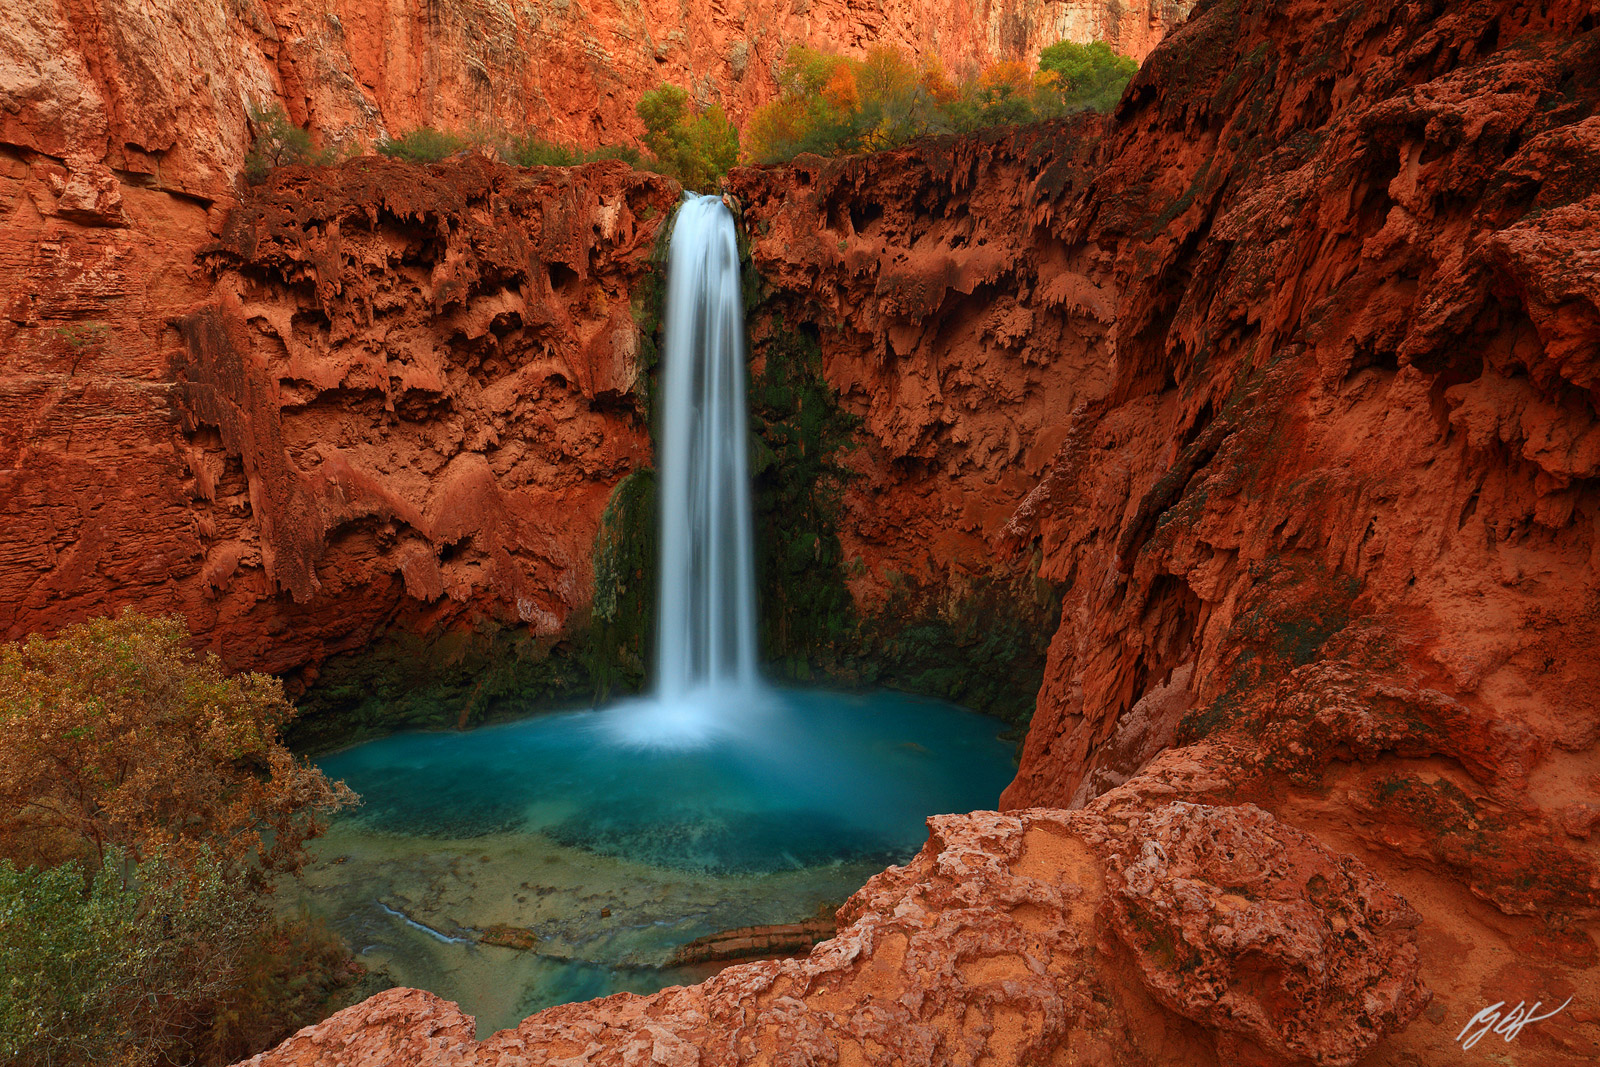 Mooney Falls in Havasu Canyon in the Havasupai Indian Reservation in Arizona